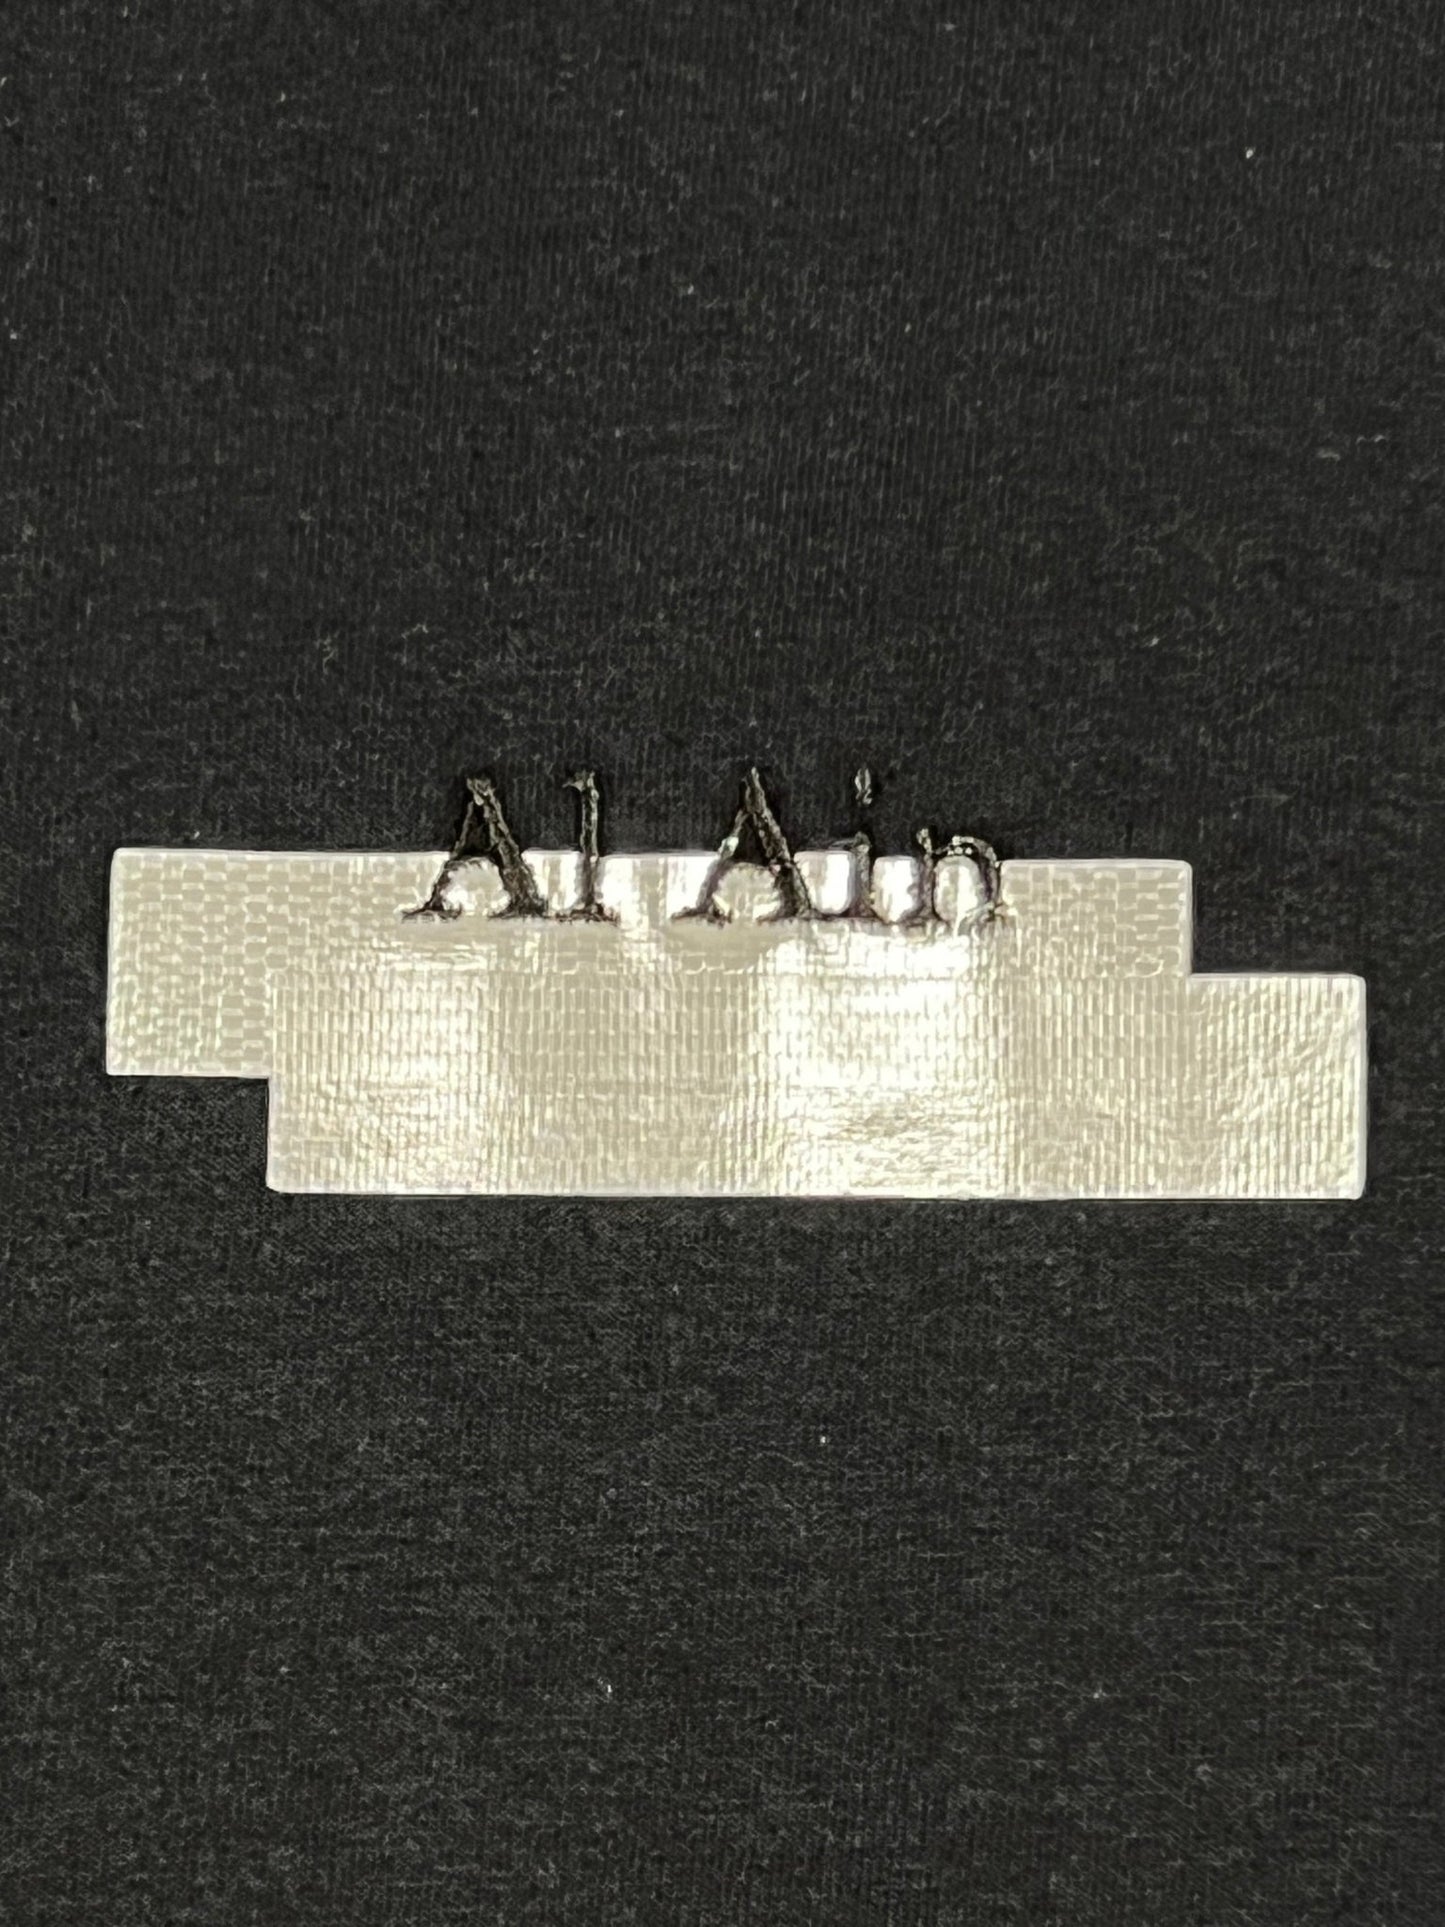 A piece of AL AIN AMHX S120 JABALIA NOIR duct tape with staples on it against a black background.